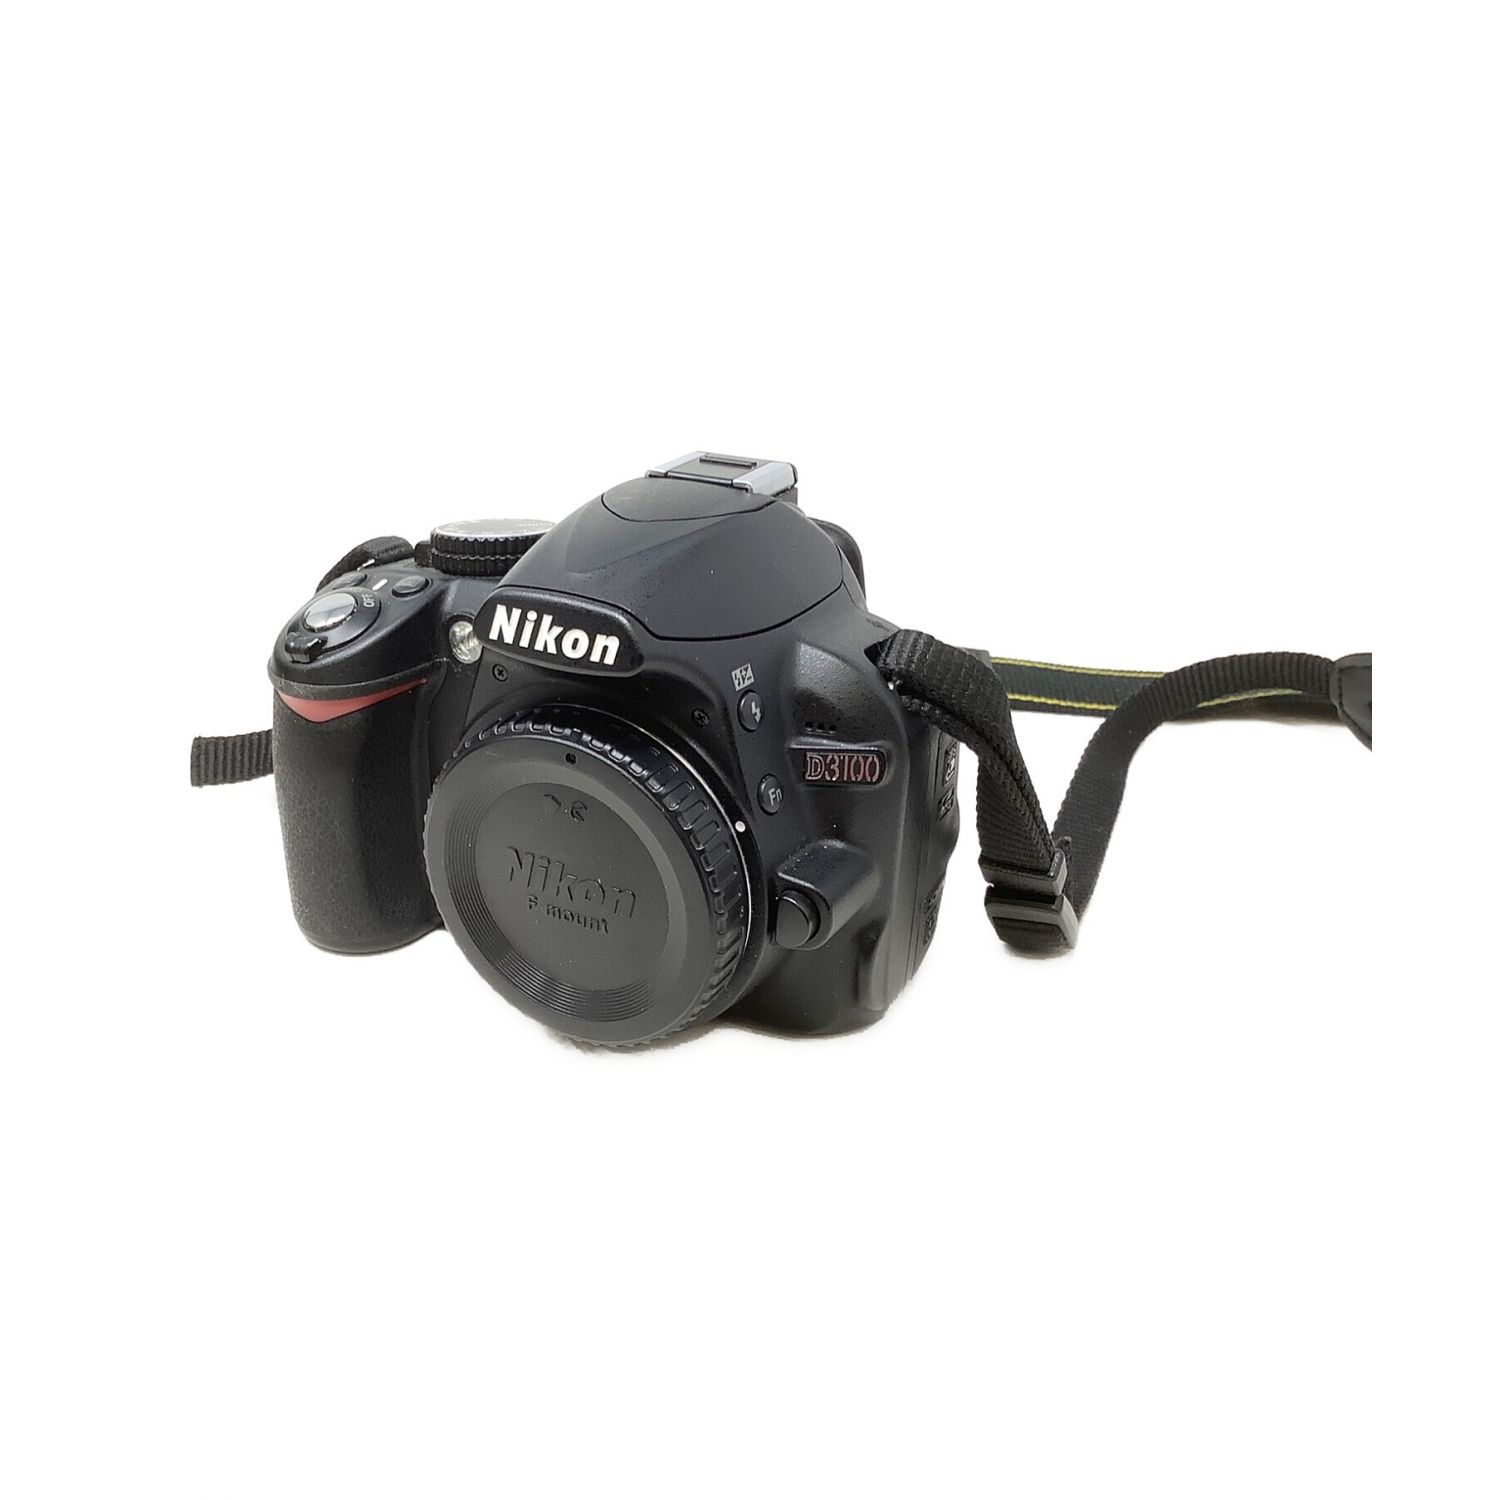 Nikon (ニコン) デジタル一眼レフカメラボディのみ 18-55VR D3100